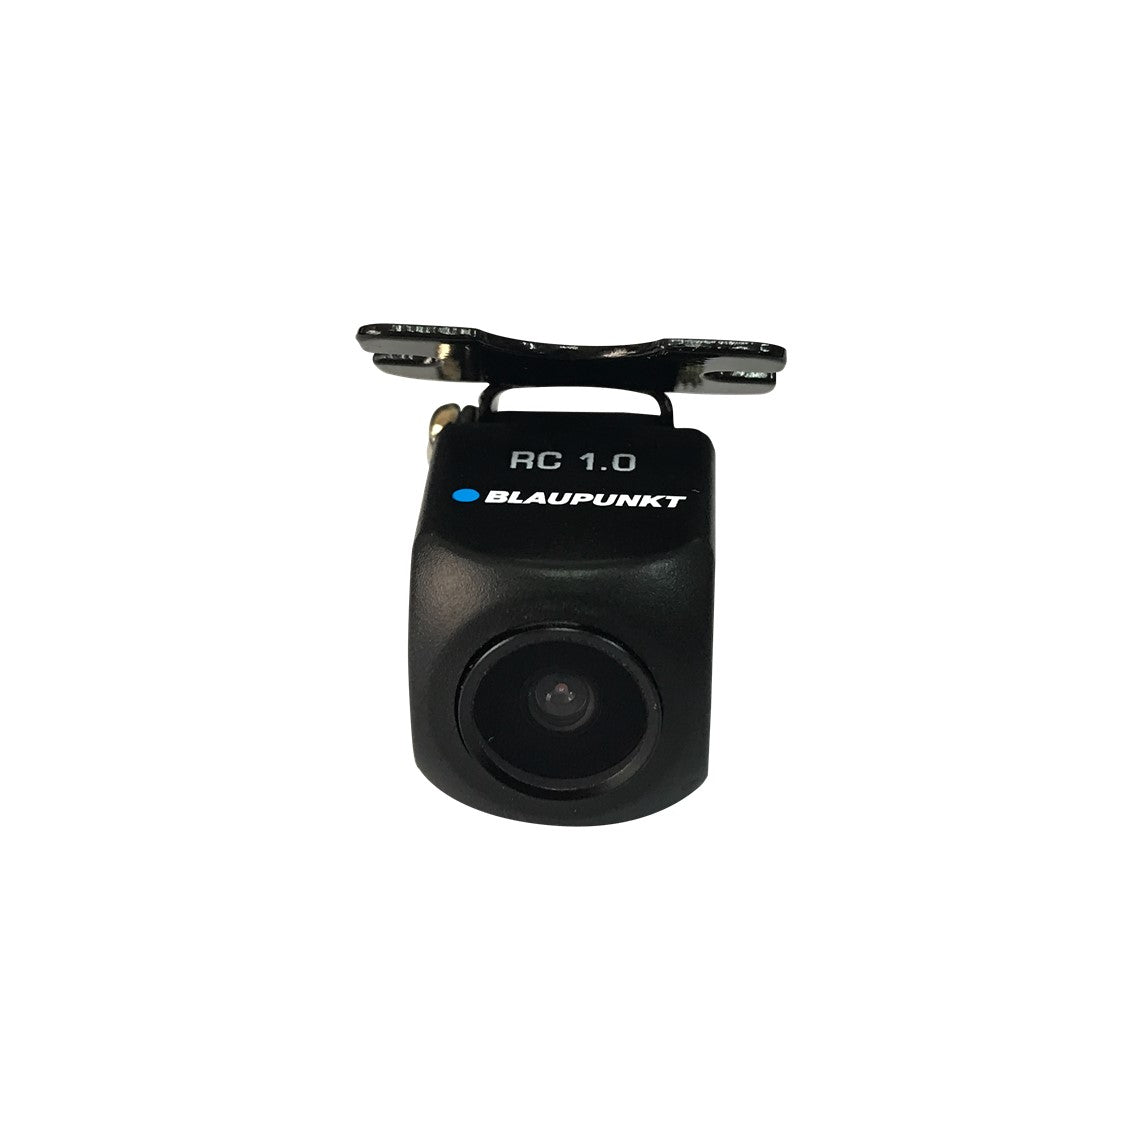 Blaupunkt RC 1.0 170° Ultra Wide CMOS Sensor Universal Car Rear View Camera - Xcite Audio